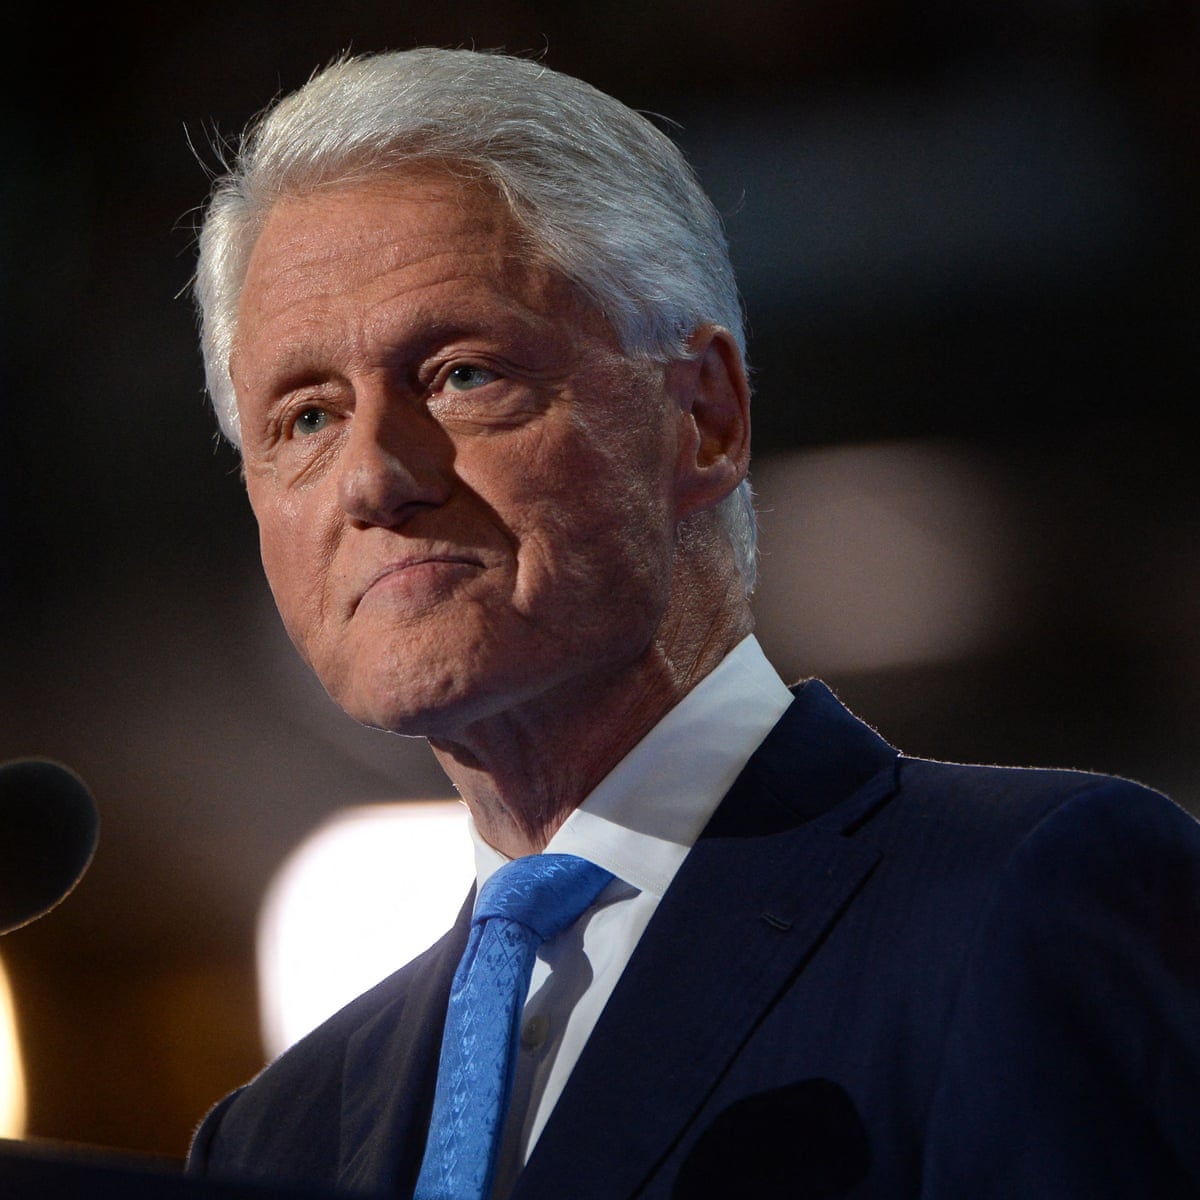 Bill Clinton Biography in Hindi